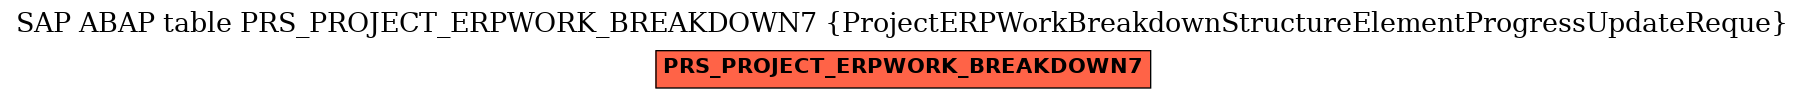 E-R Diagram for table PRS_PROJECT_ERPWORK_BREAKDOWN7 (ProjectERPWorkBreakdownStructureElementProgressUpdateReque)